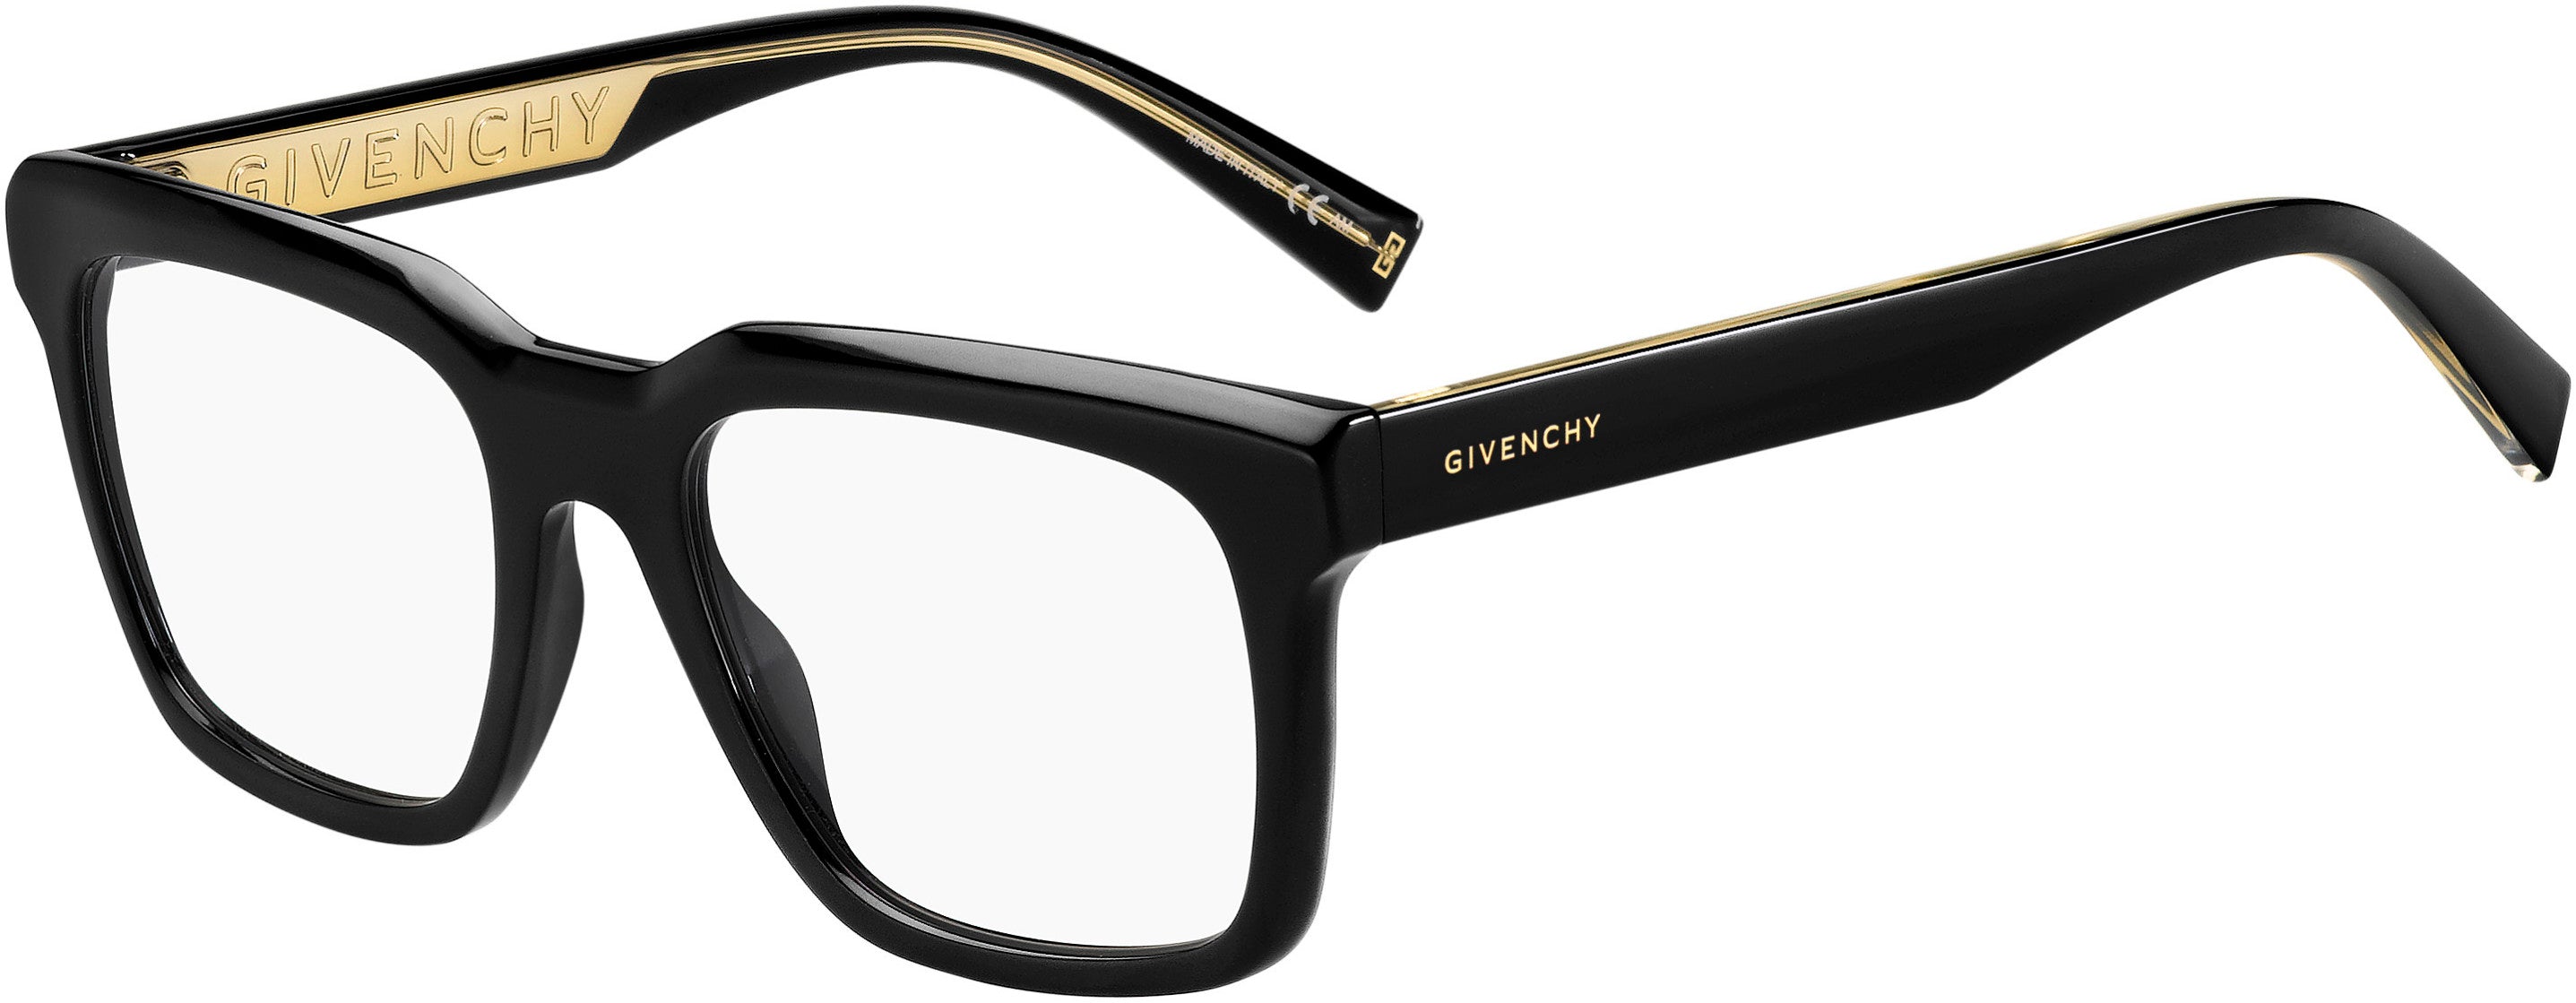  Givenchy 0123 Square Eyeglasses 0807-0807  Black (00 Demo Lens)